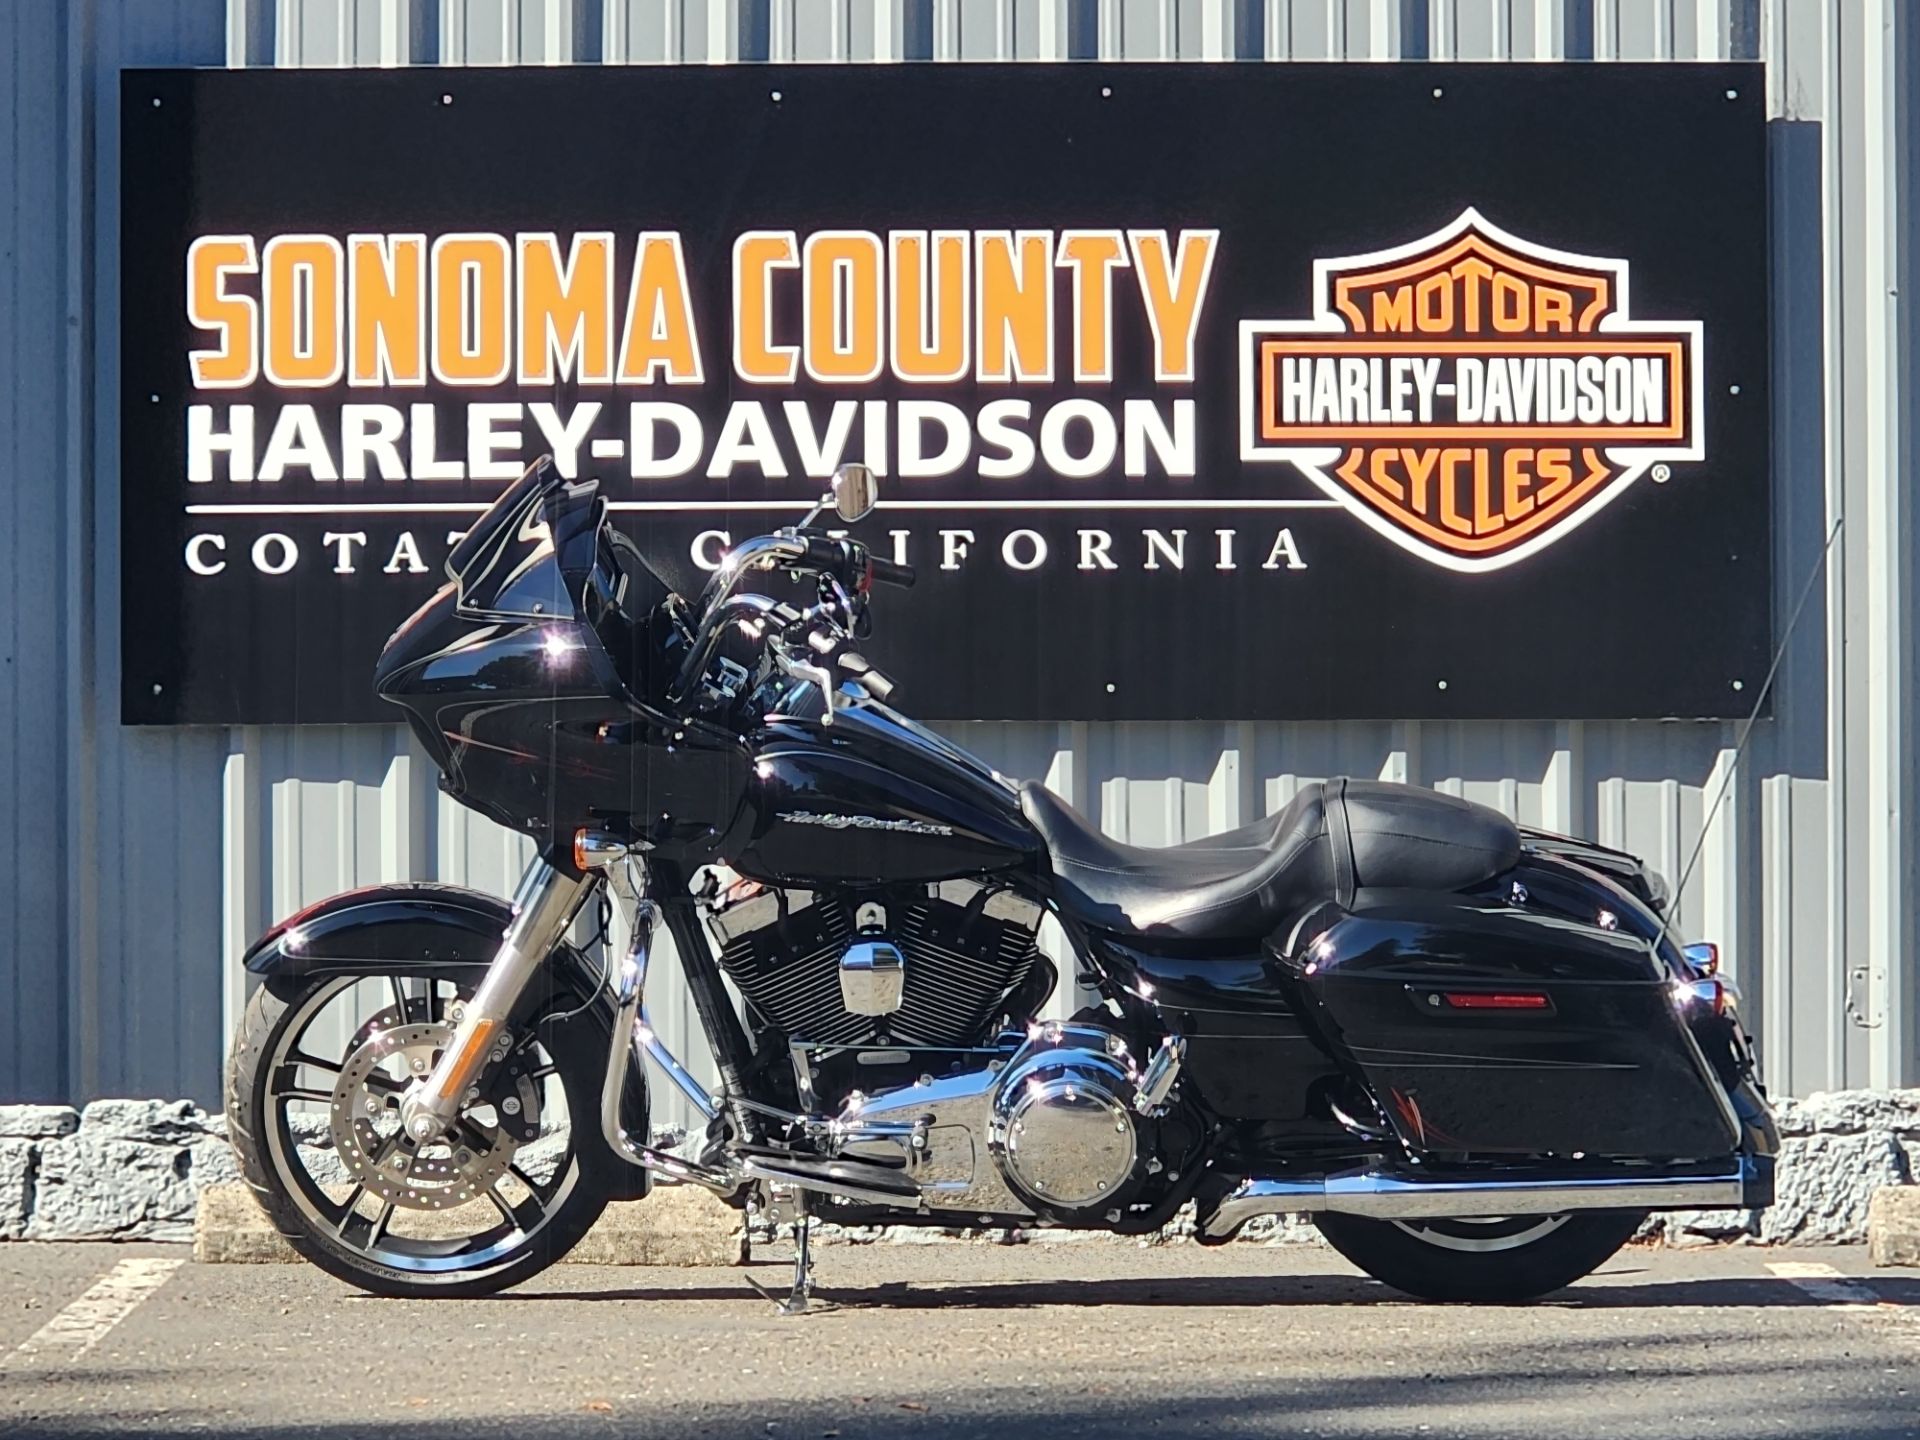 2015 Harley-Davidson Road Glide® Special in Cotati, California - Photo 3